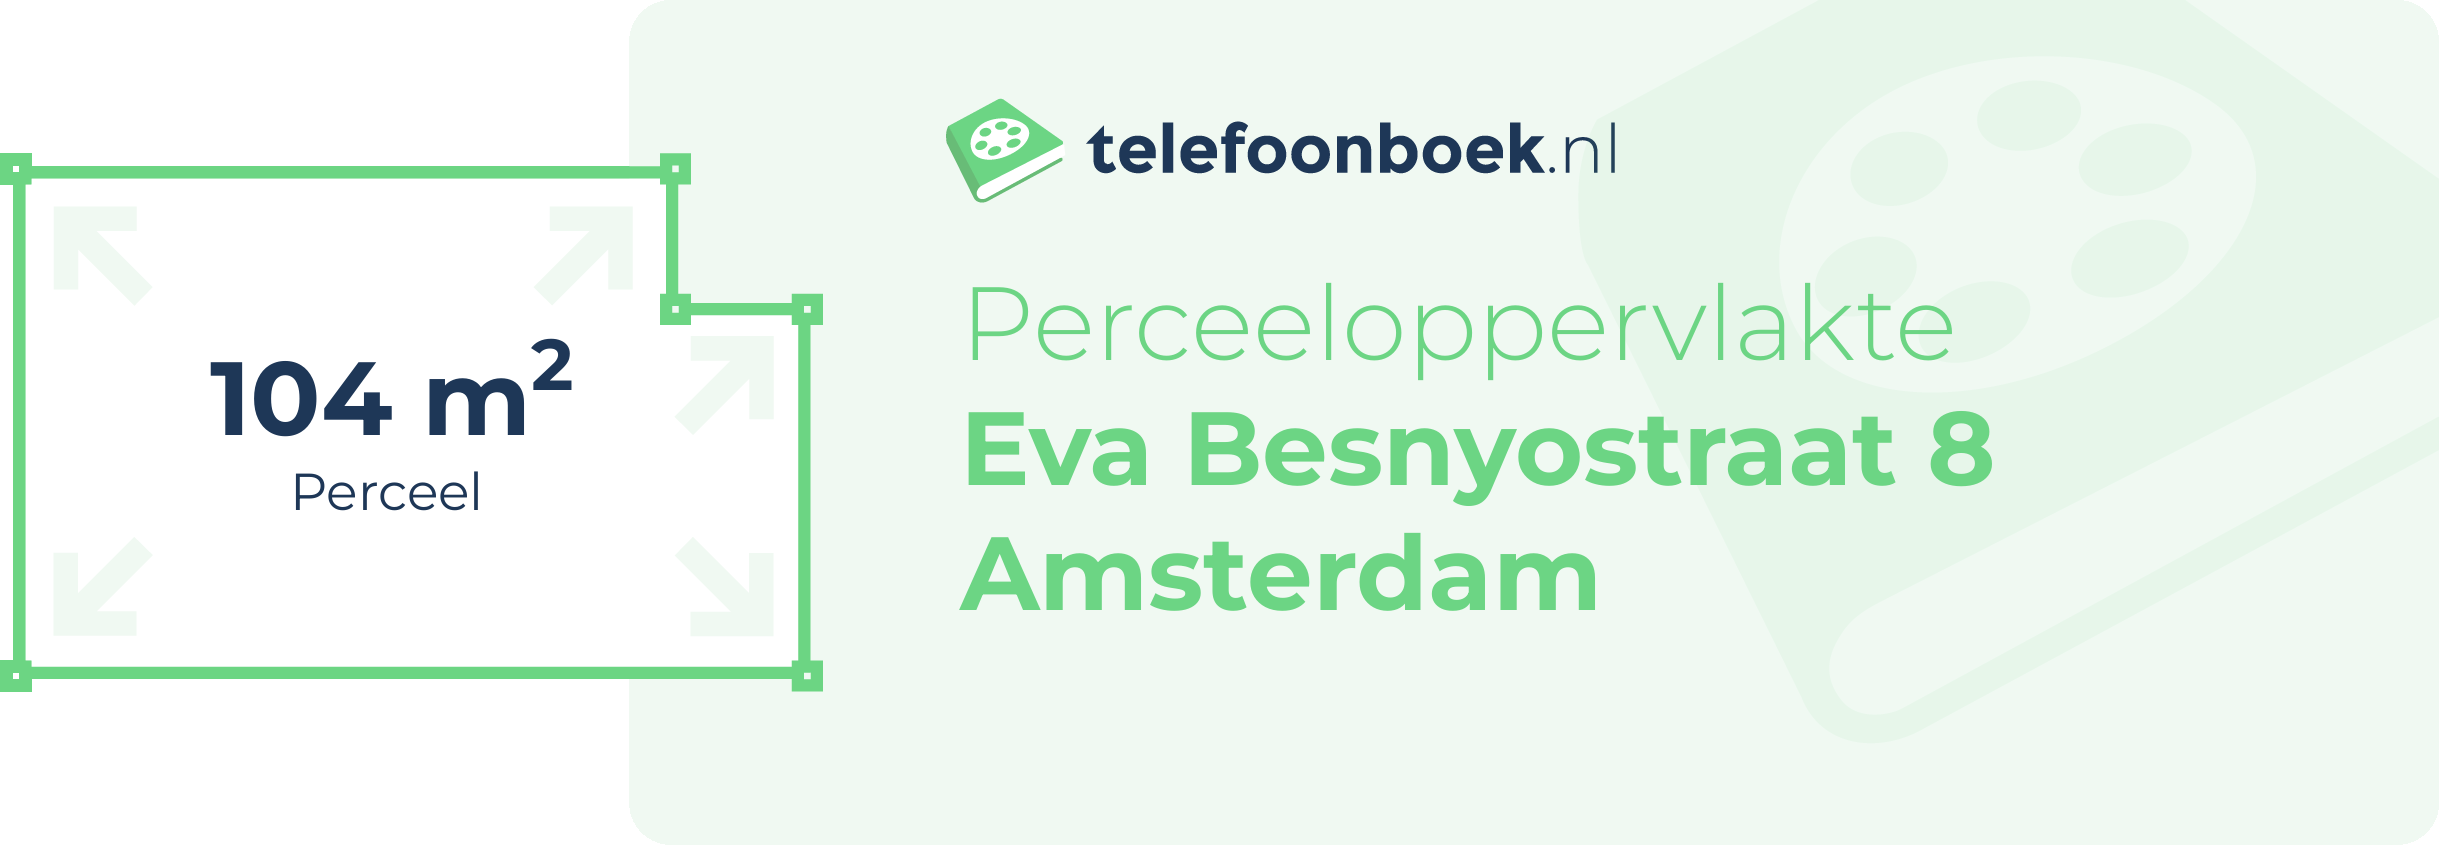 Perceeloppervlakte Eva Besnyostraat 8 Amsterdam